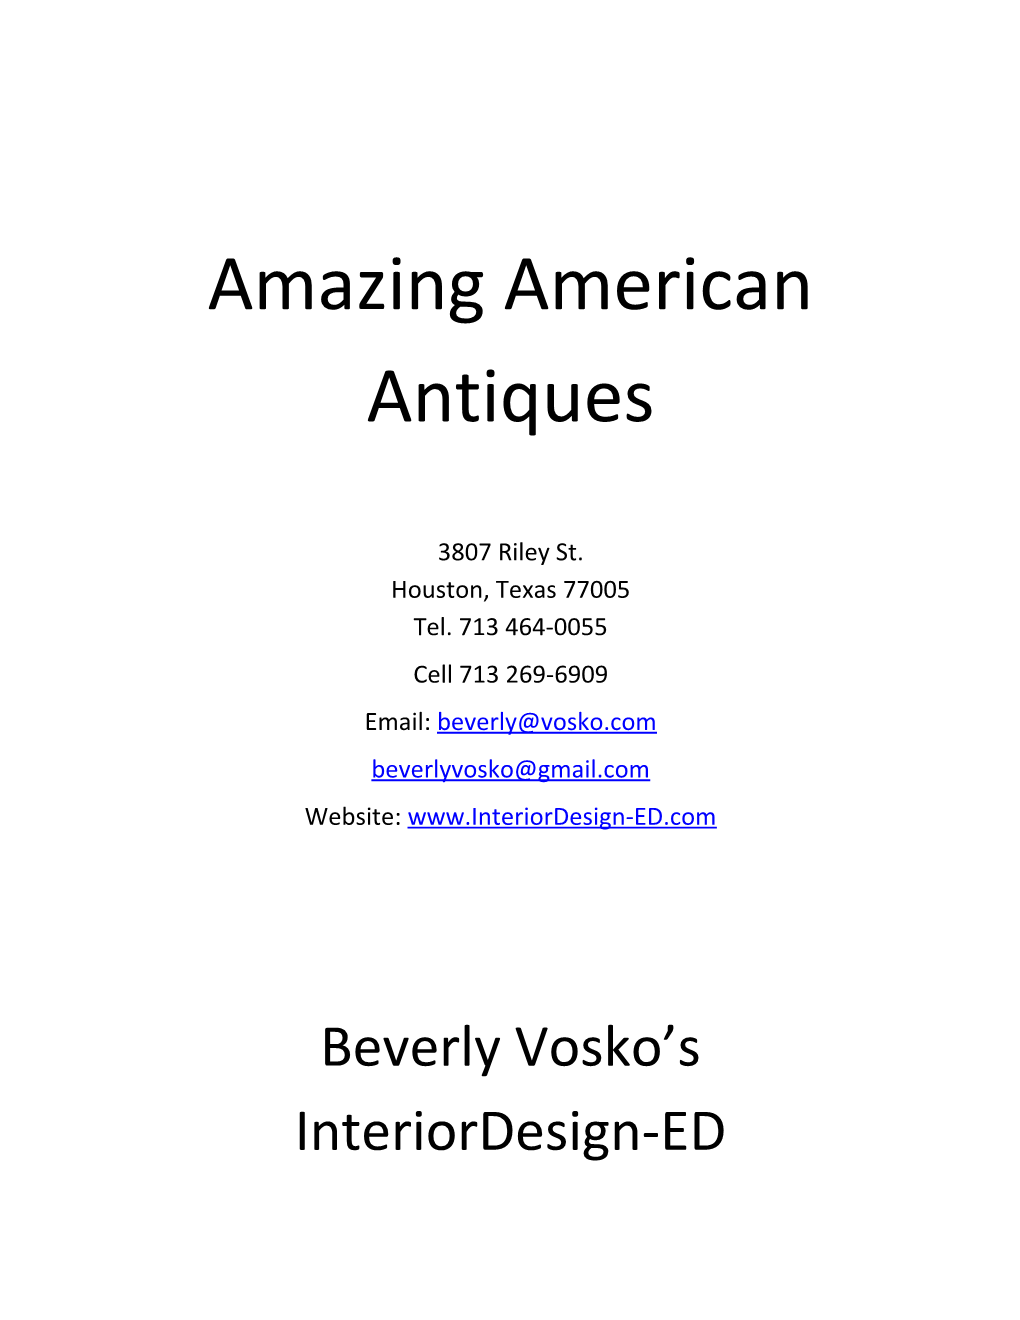 Amazing American Antiques